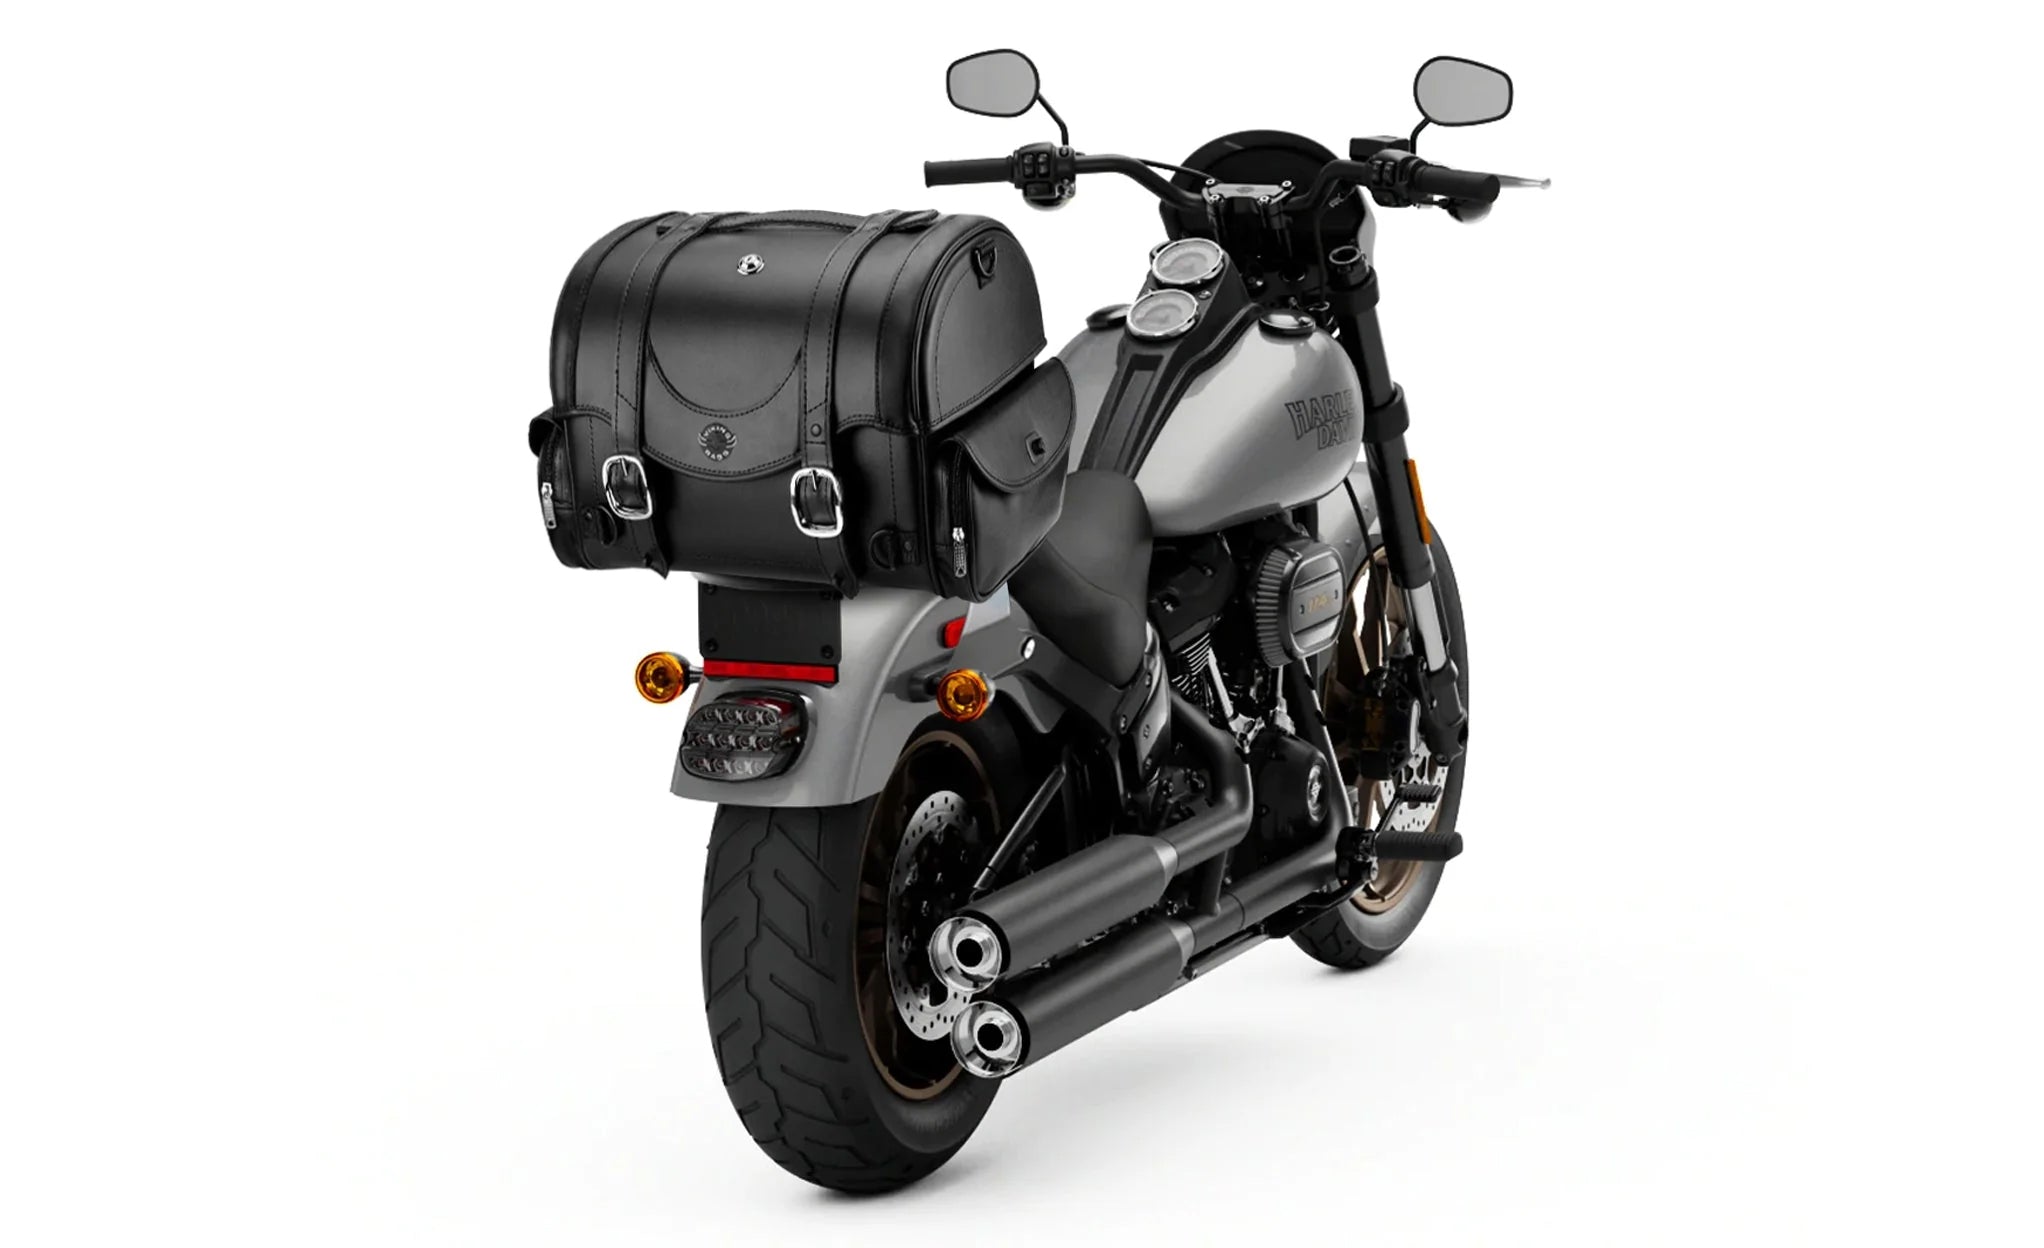 21L - Century Medium BMW Leather Motorcycle Sissy Bar Bag on Bike Photo @expand